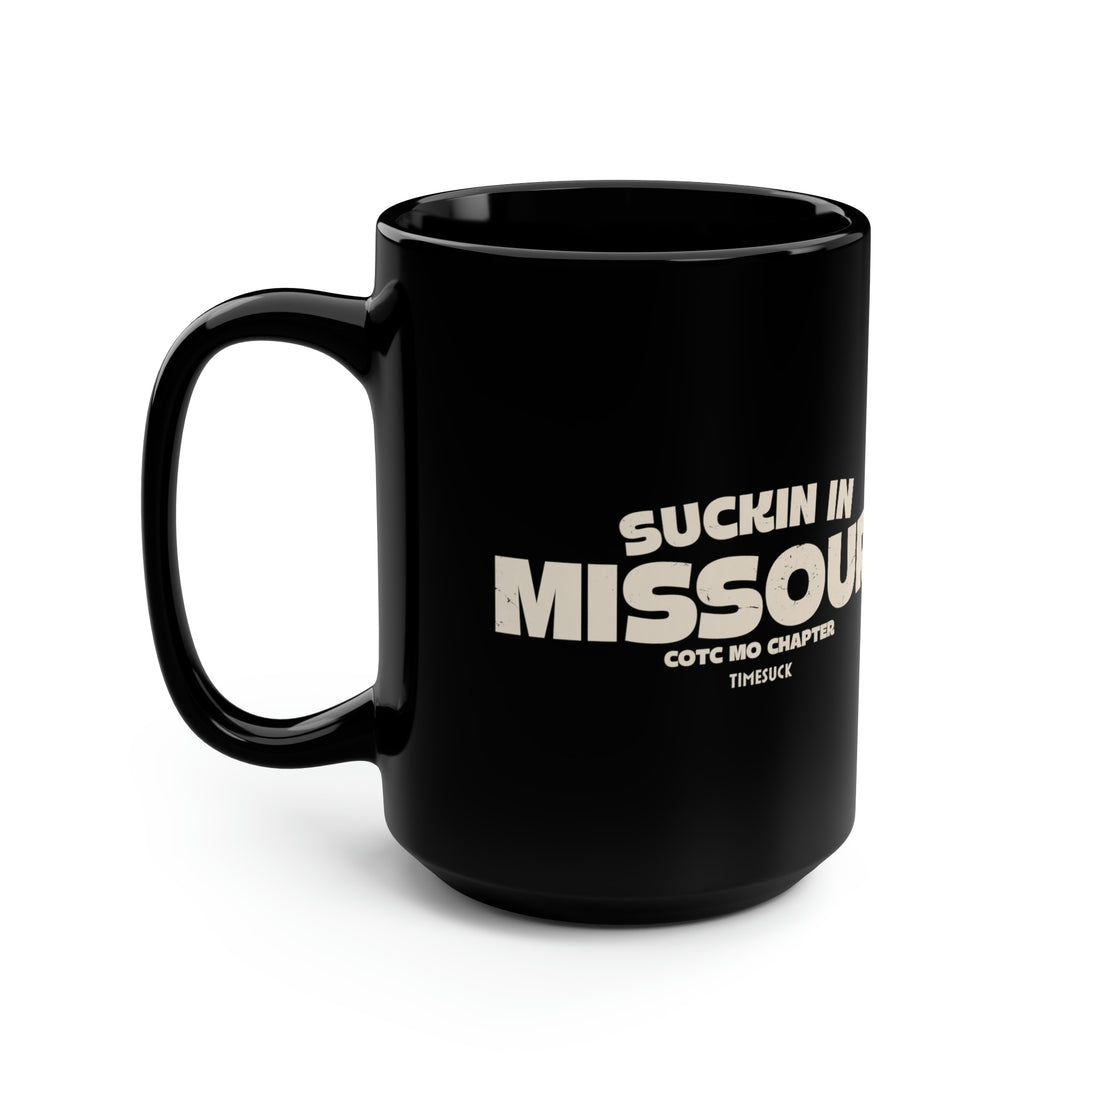 Missouri Cult Mug